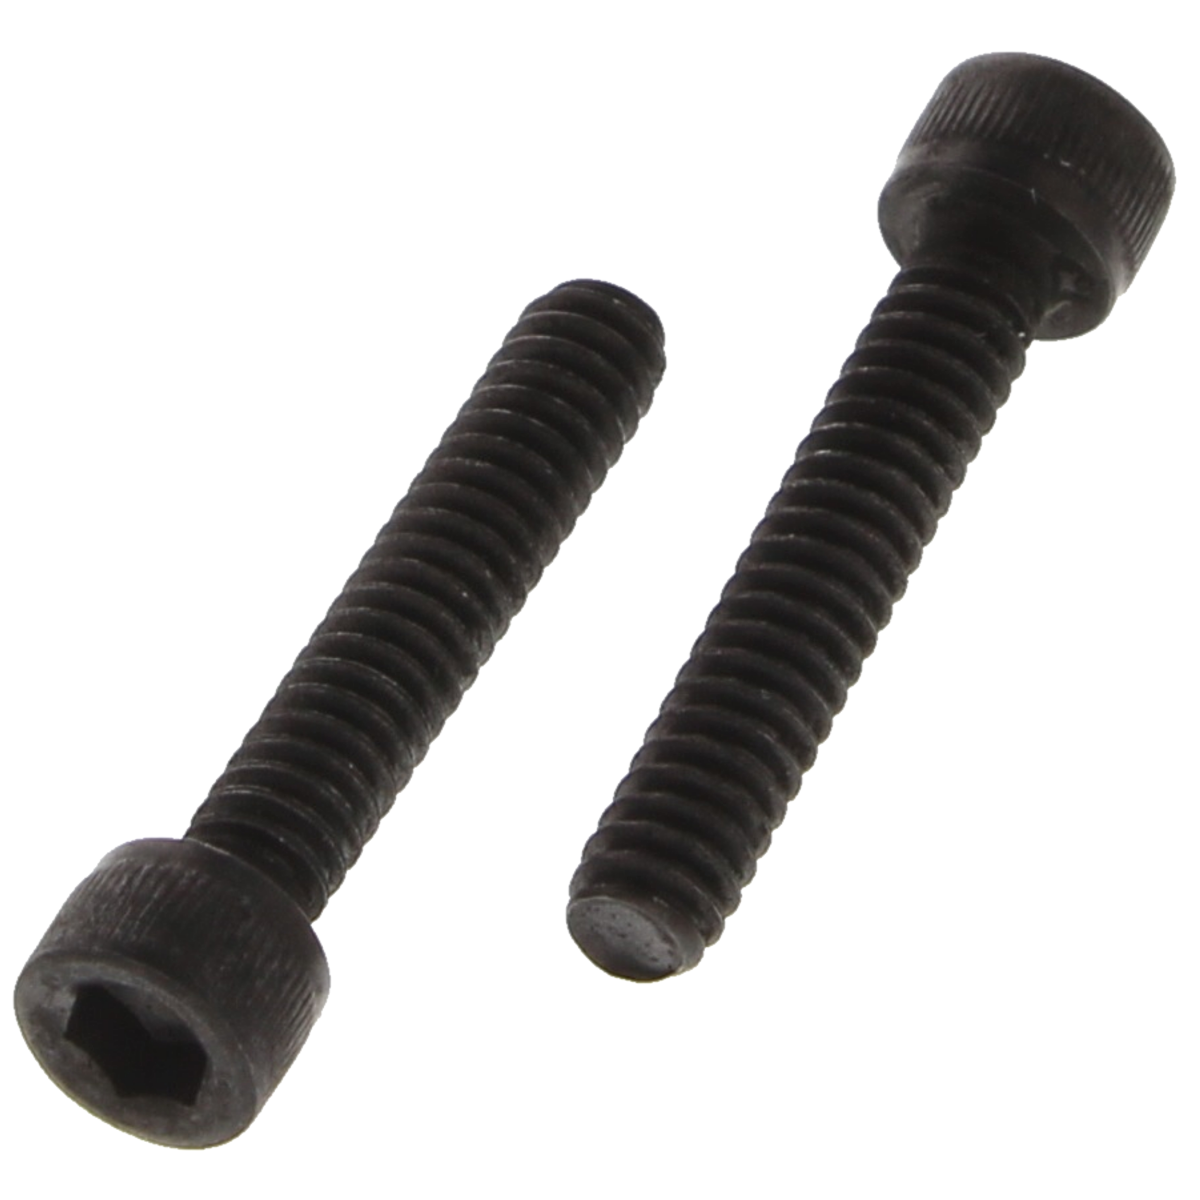 #10-24 x 2" Socket Head Cap Screws — Alloy Steel Heat Treated, Coarse Thread, Black Oxide, 100/PKG